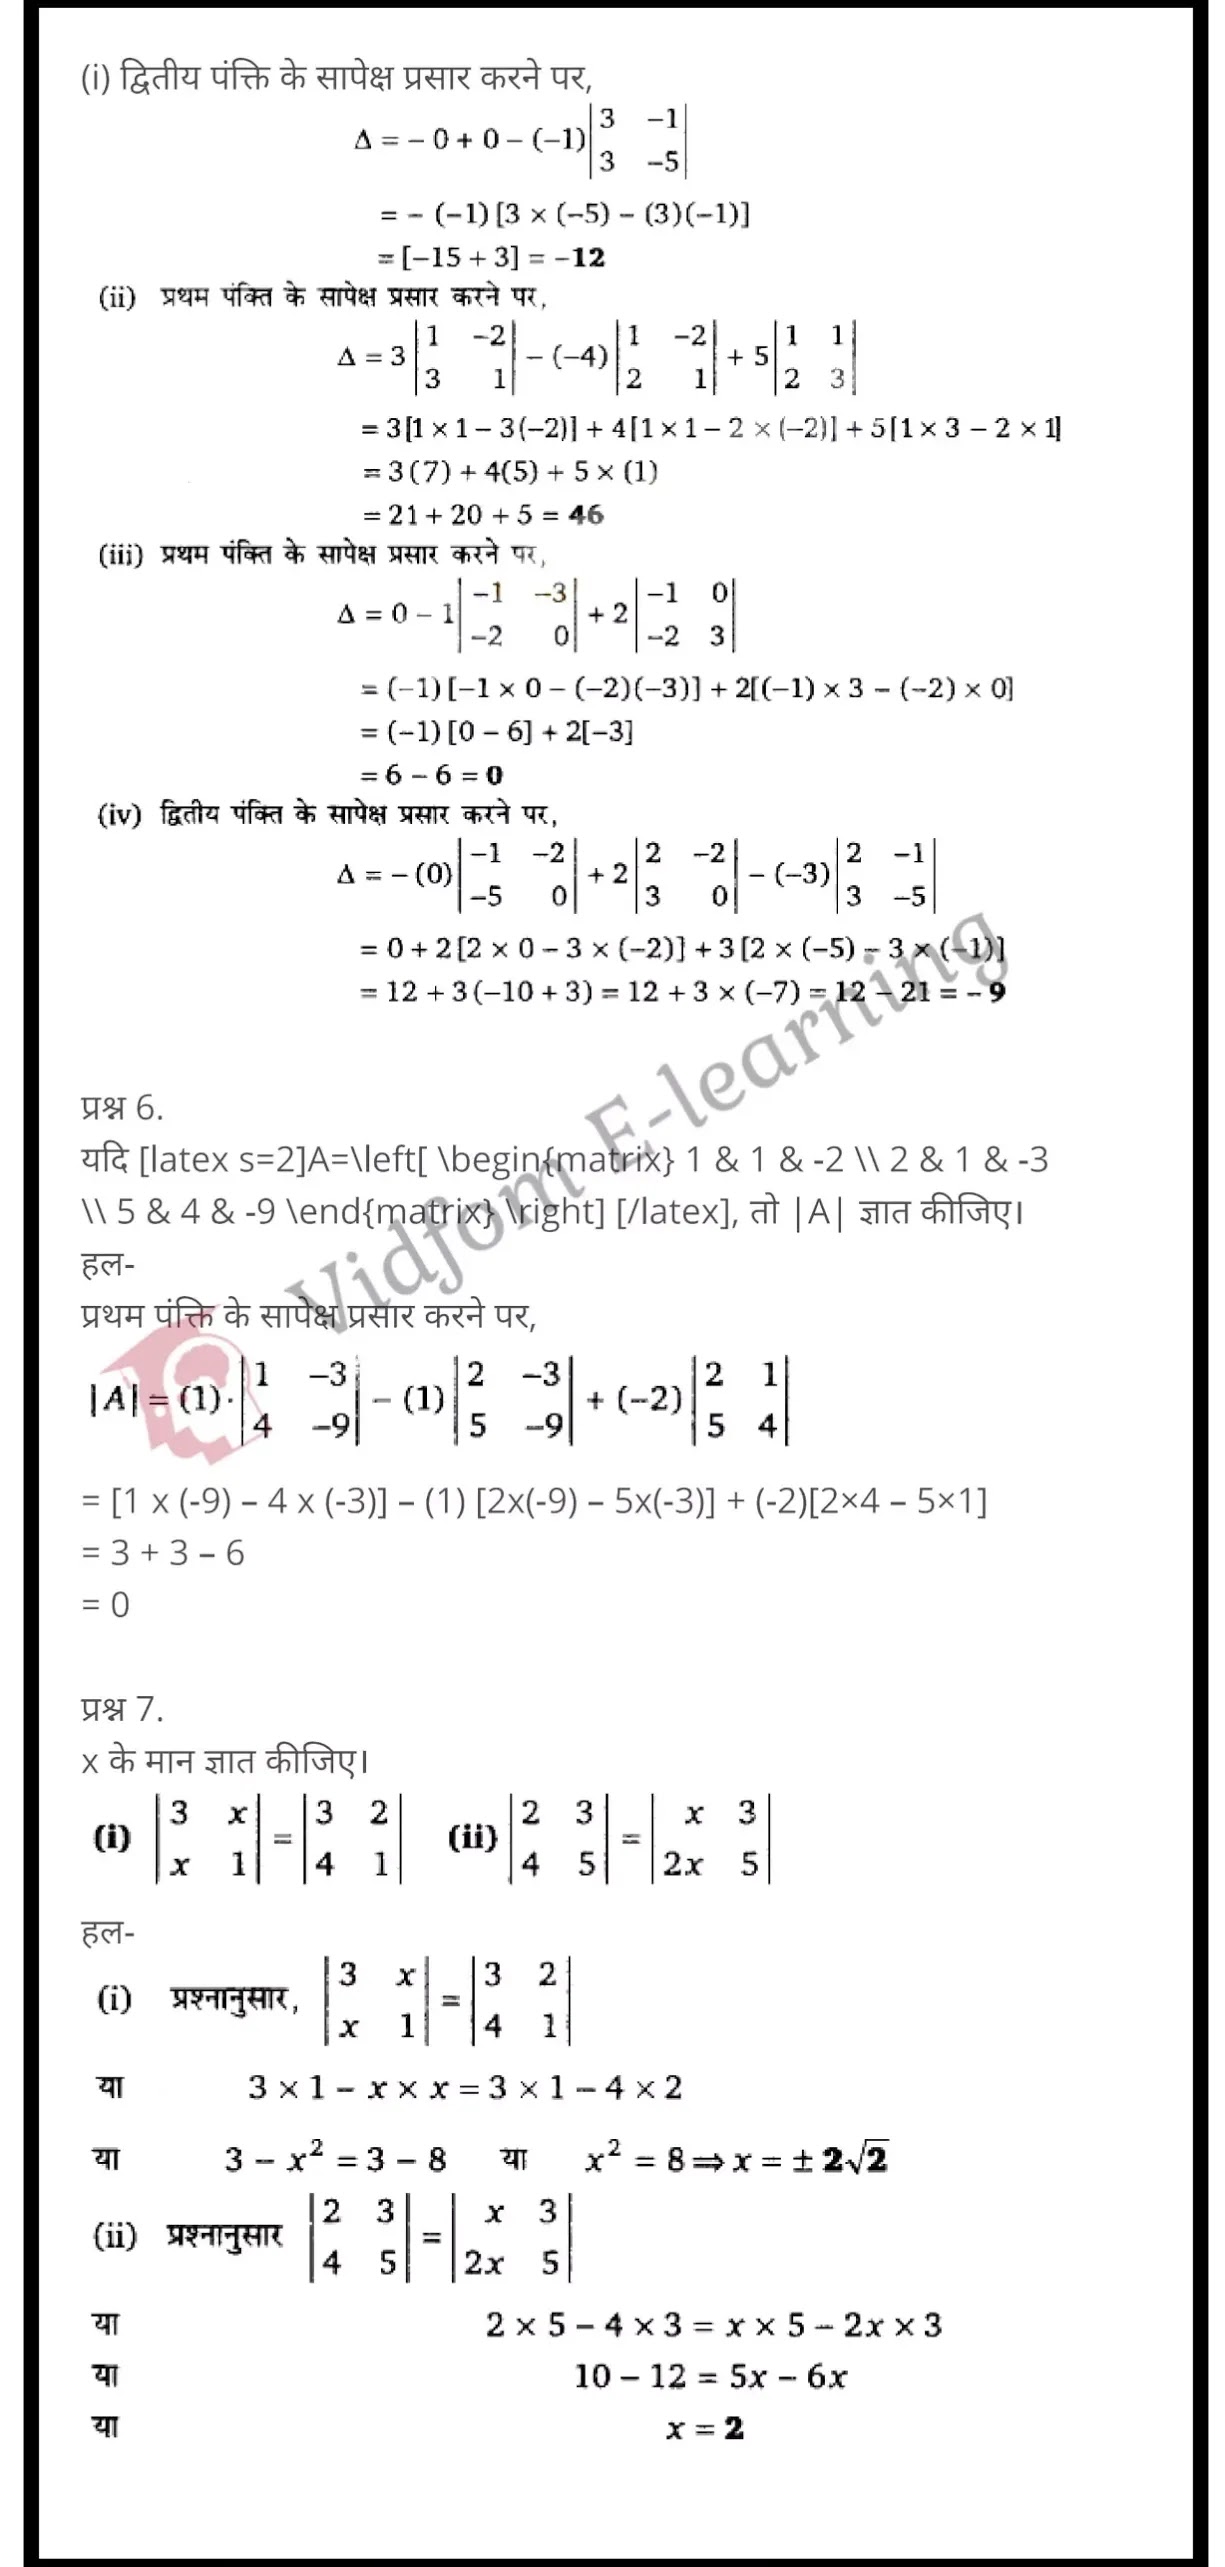 कक्षा 12 गणित  के नोट्स  हिंदी में एनसीईआरटी समाधान,     class 12 Maths Chapter 4,   class 12 Maths Chapter 4 ncert solutions in Hindi,   class 12 Maths Chapter 4 notes in hindi,   class 12 Maths Chapter 4 question answer,   class 12 Maths Chapter 4 notes,   class 12 Maths Chapter 4 class 12 Maths Chapter 4 in  hindi,    class 12 Maths Chapter 4 important questions in  hindi,   class 12 Maths Chapter 4 notes in hindi,    class 12 Maths Chapter 4 test,   class 12 Maths Chapter 4 pdf,   class 12 Maths Chapter 4 notes pdf,   class 12 Maths Chapter 4 exercise solutions,   class 12 Maths Chapter 4 notes study rankers,   class 12 Maths Chapter 4 notes,    class 12 Maths Chapter 4  class 12  notes pdf,   class 12 Maths Chapter 4 class 12  notes  ncert,   class 12 Maths Chapter 4 class 12 pdf,   class 12 Maths Chapter 4  book,   class 12 Maths Chapter 4 quiz class 12  ,    10  th class 12 Maths Chapter 4  book up board,   up board 10  th class 12 Maths Chapter 4 notes,  class 12 Maths,   class 12 Maths ncert solutions in Hindi,   class 12 Maths notes in hindi,   class 12 Maths question answer,   class 12 Maths notes,  class 12 Maths class 12 Maths Chapter 4 in  hindi,    class 12 Maths important questions in  hindi,   class 12 Maths notes in hindi,    class 12 Maths test,  class 12 Maths class 12 Maths Chapter 4 pdf,   class 12 Maths notes pdf,   class 12 Maths exercise solutions,   class 12 Maths,  class 12 Maths notes study rankers,   class 12 Maths notes,  class 12 Maths notes,   class 12 Maths  class 12  notes pdf,   class 12 Maths class 12  notes  ncert,   class 12 Maths class 12 pdf,   class 12 Maths  book,  class 12 Maths quiz class 12  ,  10  th class 12 Maths    book up board,    up board 10  th class 12 Maths notes,      कक्षा 12 गणित अध्याय 4 ,  कक्षा 12 गणित, कक्षा 12 गणित अध्याय 4  के नोट्स हिंदी में,  कक्षा 12 का हिंदी अध्याय 4 का प्रश्न उत्तर,  कक्षा 12 गणित अध्याय 4  के नोट्स,  10 कक्षा गणित  हिंदी में, कक्षा 12 गणित अध्याय 4  हिंदी में,  कक्षा 12 गणित अध्याय 4  महत्वपूर्ण प्रश्न हिंदी में, कक्षा 12   हिंदी के नोट्स  हिंदी में, गणित हिंदी में  कक्षा 12 नोट्स pdf,    गणित हिंदी में  कक्षा 12 नोट्स 2021 ncert,   गणित हिंदी  कक्षा 12 pdf,   गणित हिंदी में  पुस्तक,   गणित हिंदी में की बुक,   गणित हिंदी में  प्रश्नोत्तरी class 12 ,  बिहार बोर्ड   पुस्तक 12वीं हिंदी नोट्स,    गणित कक्षा 12 नोट्स 2021 ncert,   गणित  कक्षा 12 pdf,   गणित  पुस्तक,   गणित  प्रश्नोत्तरी class 12, कक्षा 12 गणित,  कक्षा 12 गणित  के नोट्स हिंदी में,  कक्षा 12 का हिंदी का प्रश्न उत्तर,  कक्षा 12 गणित  के नोट्स,  10 कक्षा हिंदी 2021  हिंदी में, कक्षा 12 गणित  हिंदी में,  कक्षा 12 गणित  महत्वपूर्ण प्रश्न हिंदी में, कक्षा 12 गणित  नोट्स  हिंदी में,